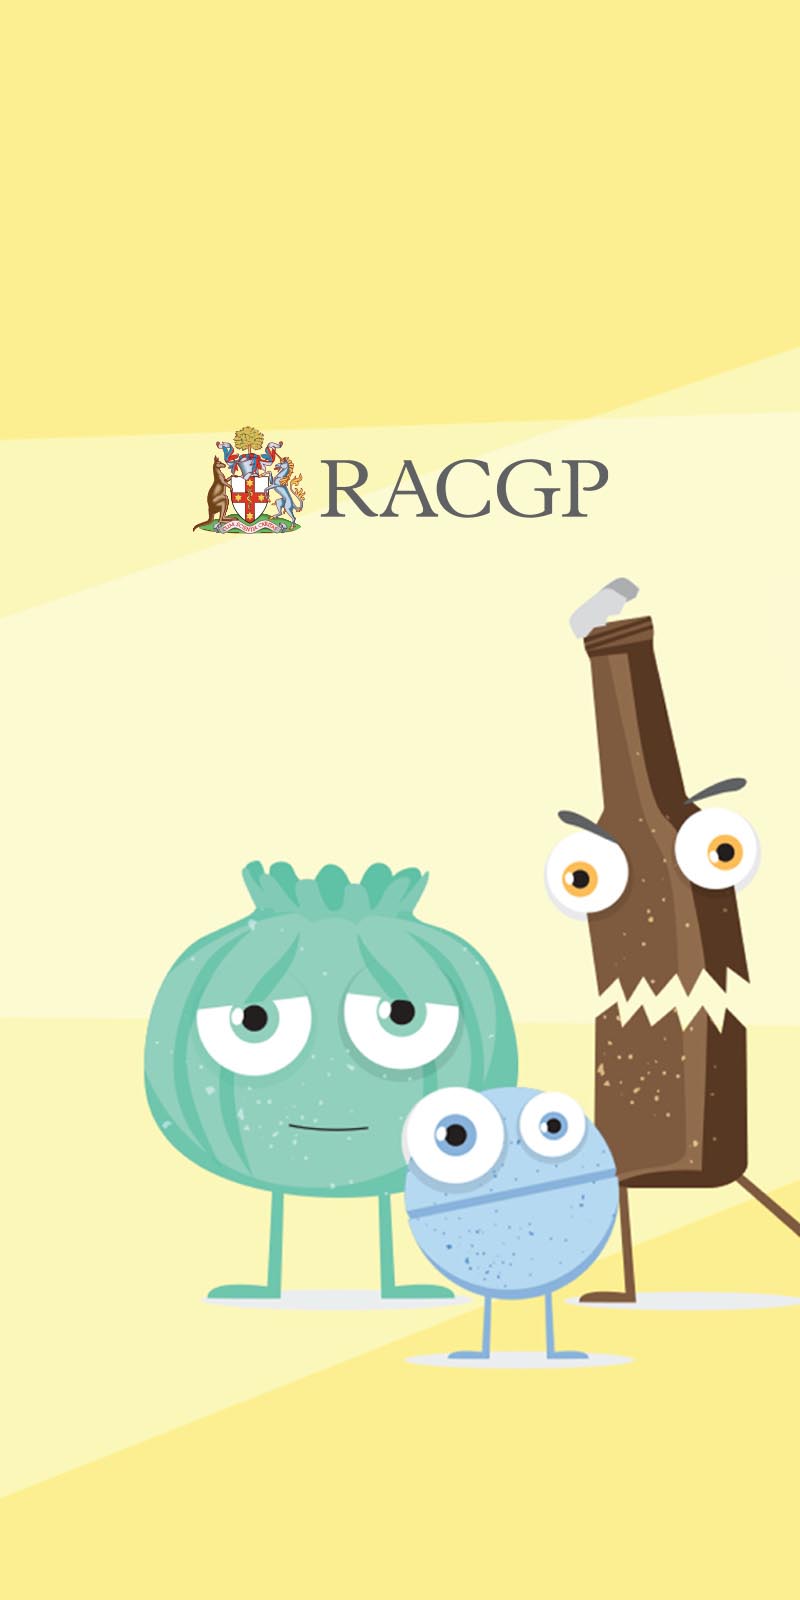 RACGP Brand Development design by Think Creative Agency